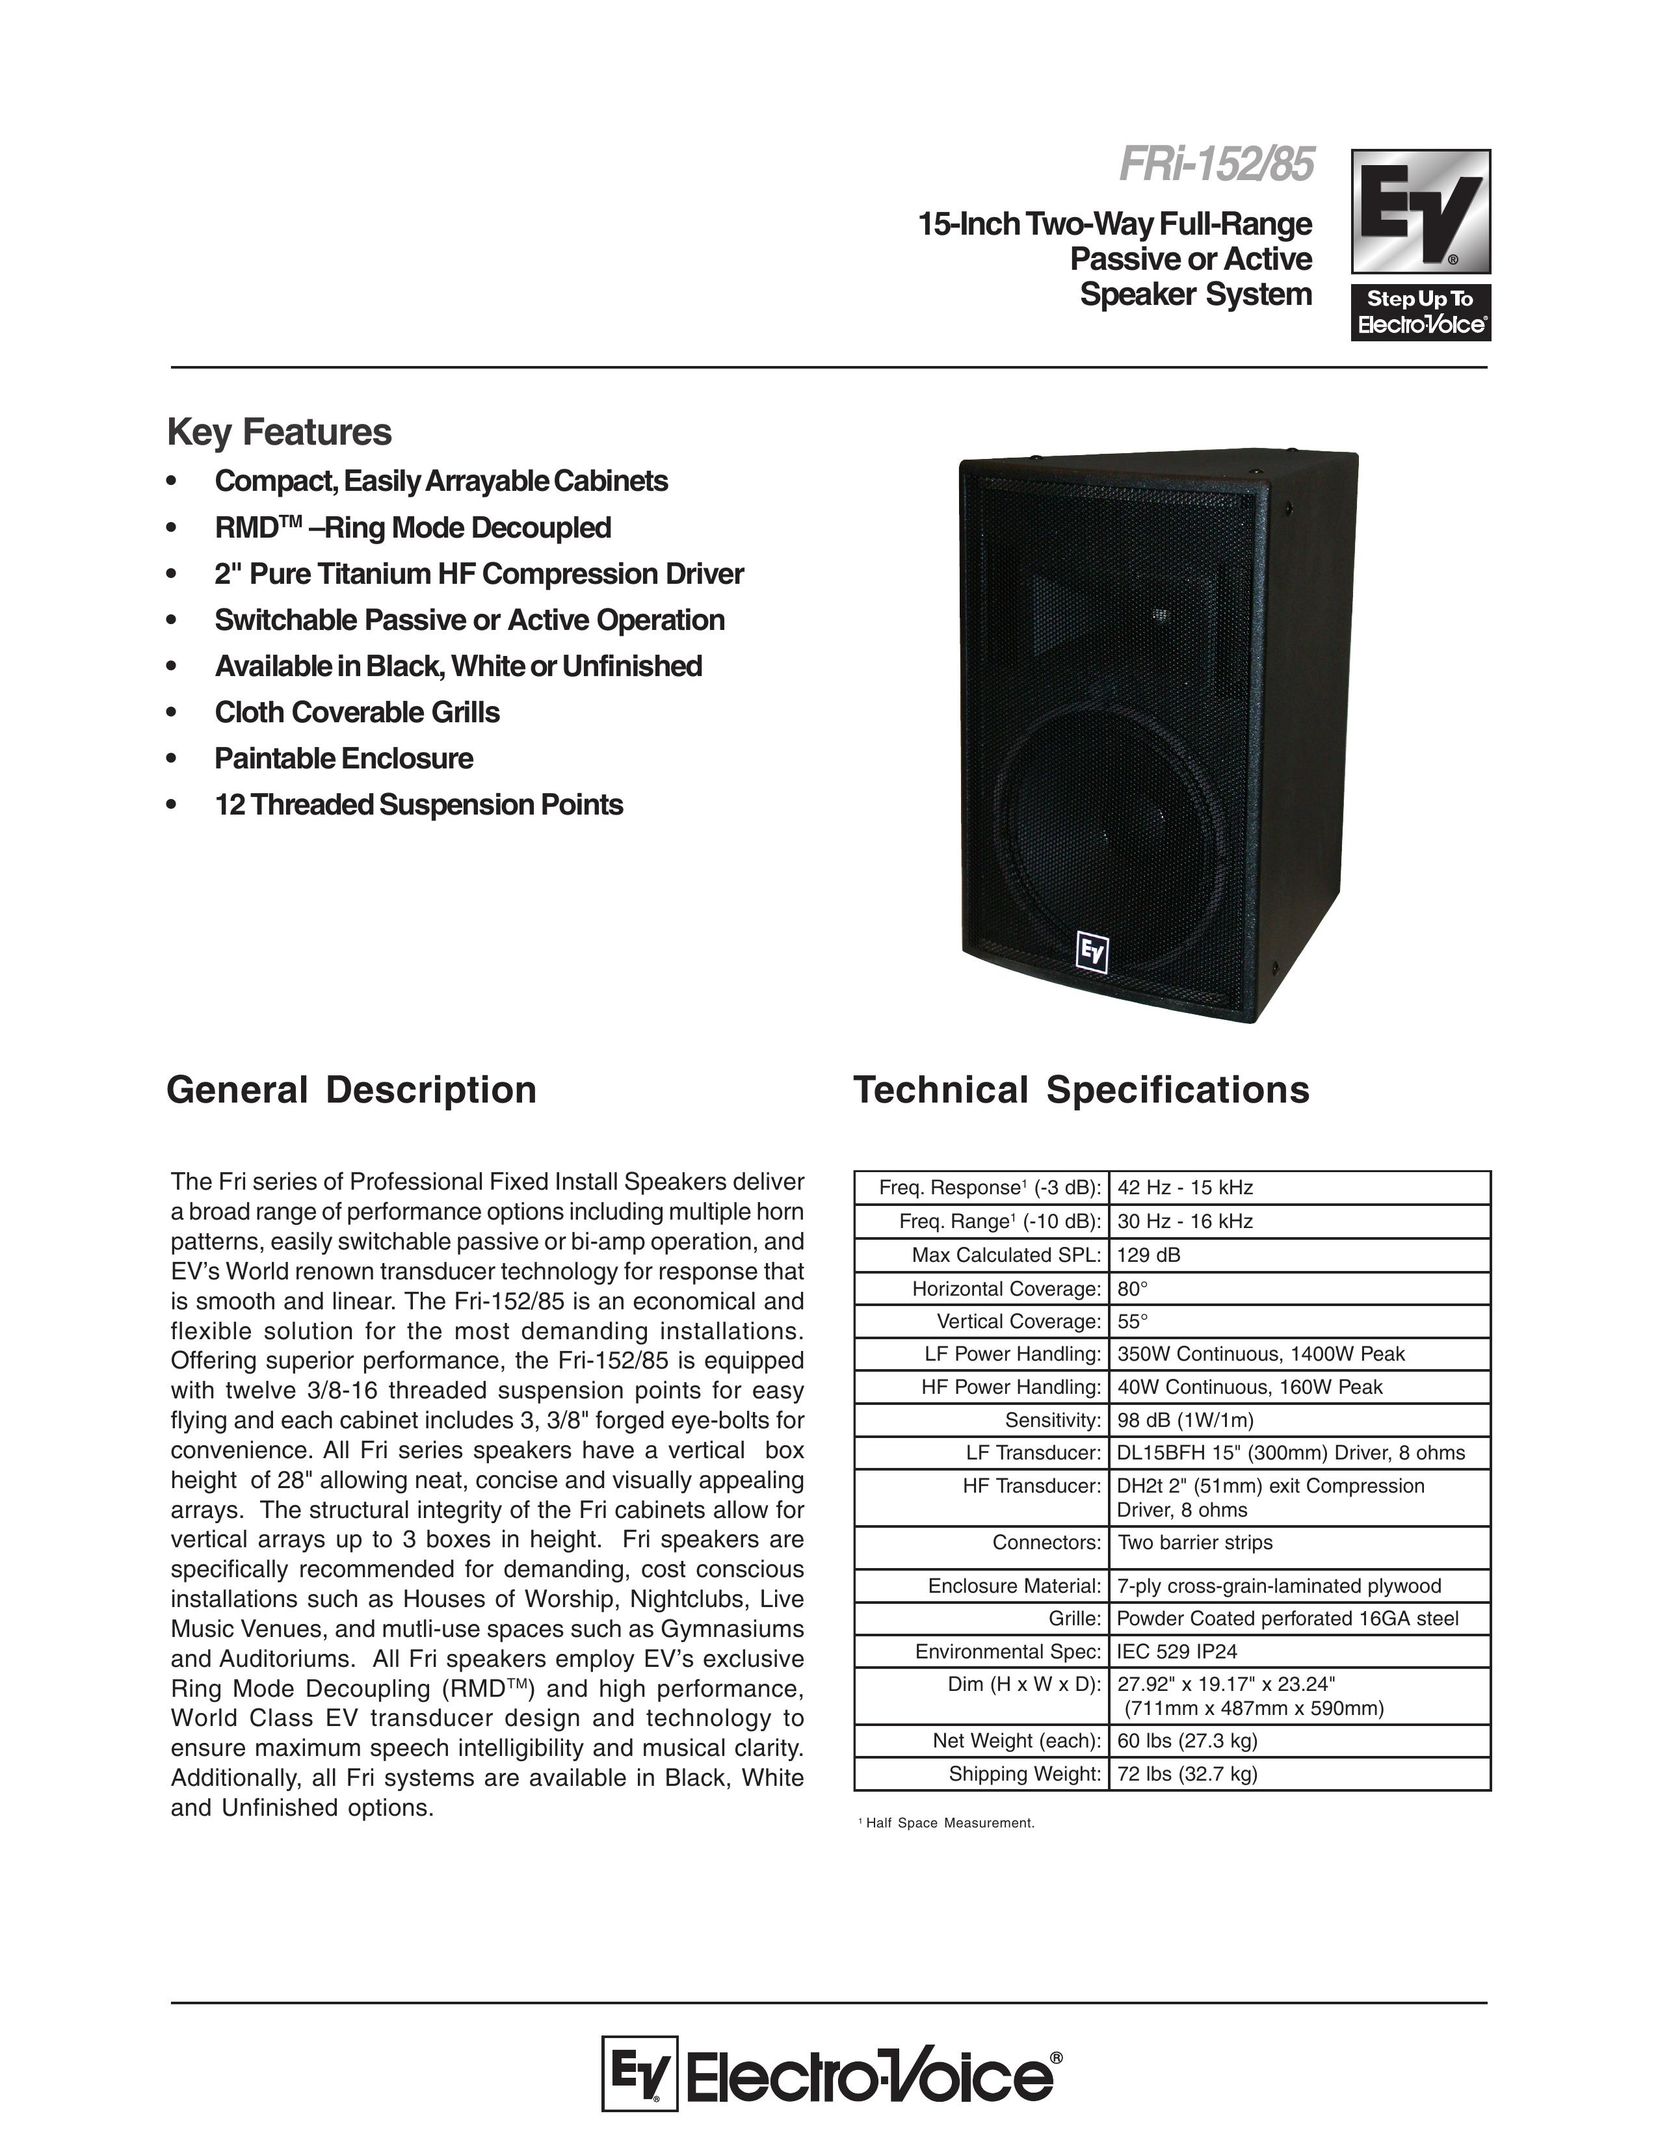 Electro-Voice FRi-152/85 Speaker System User Manual